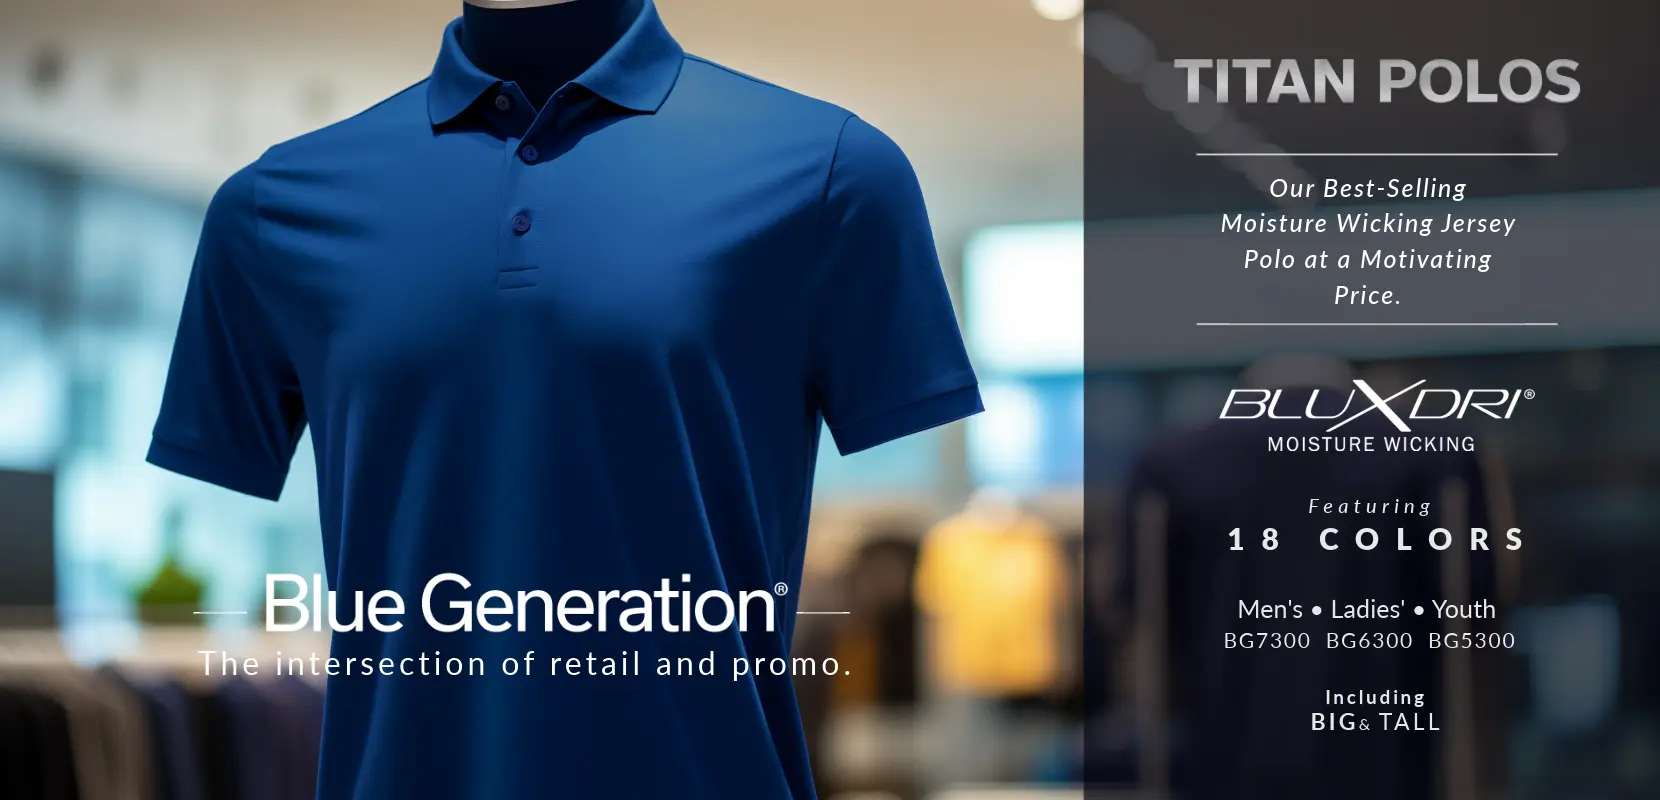 Blue Generation - Titan Polo